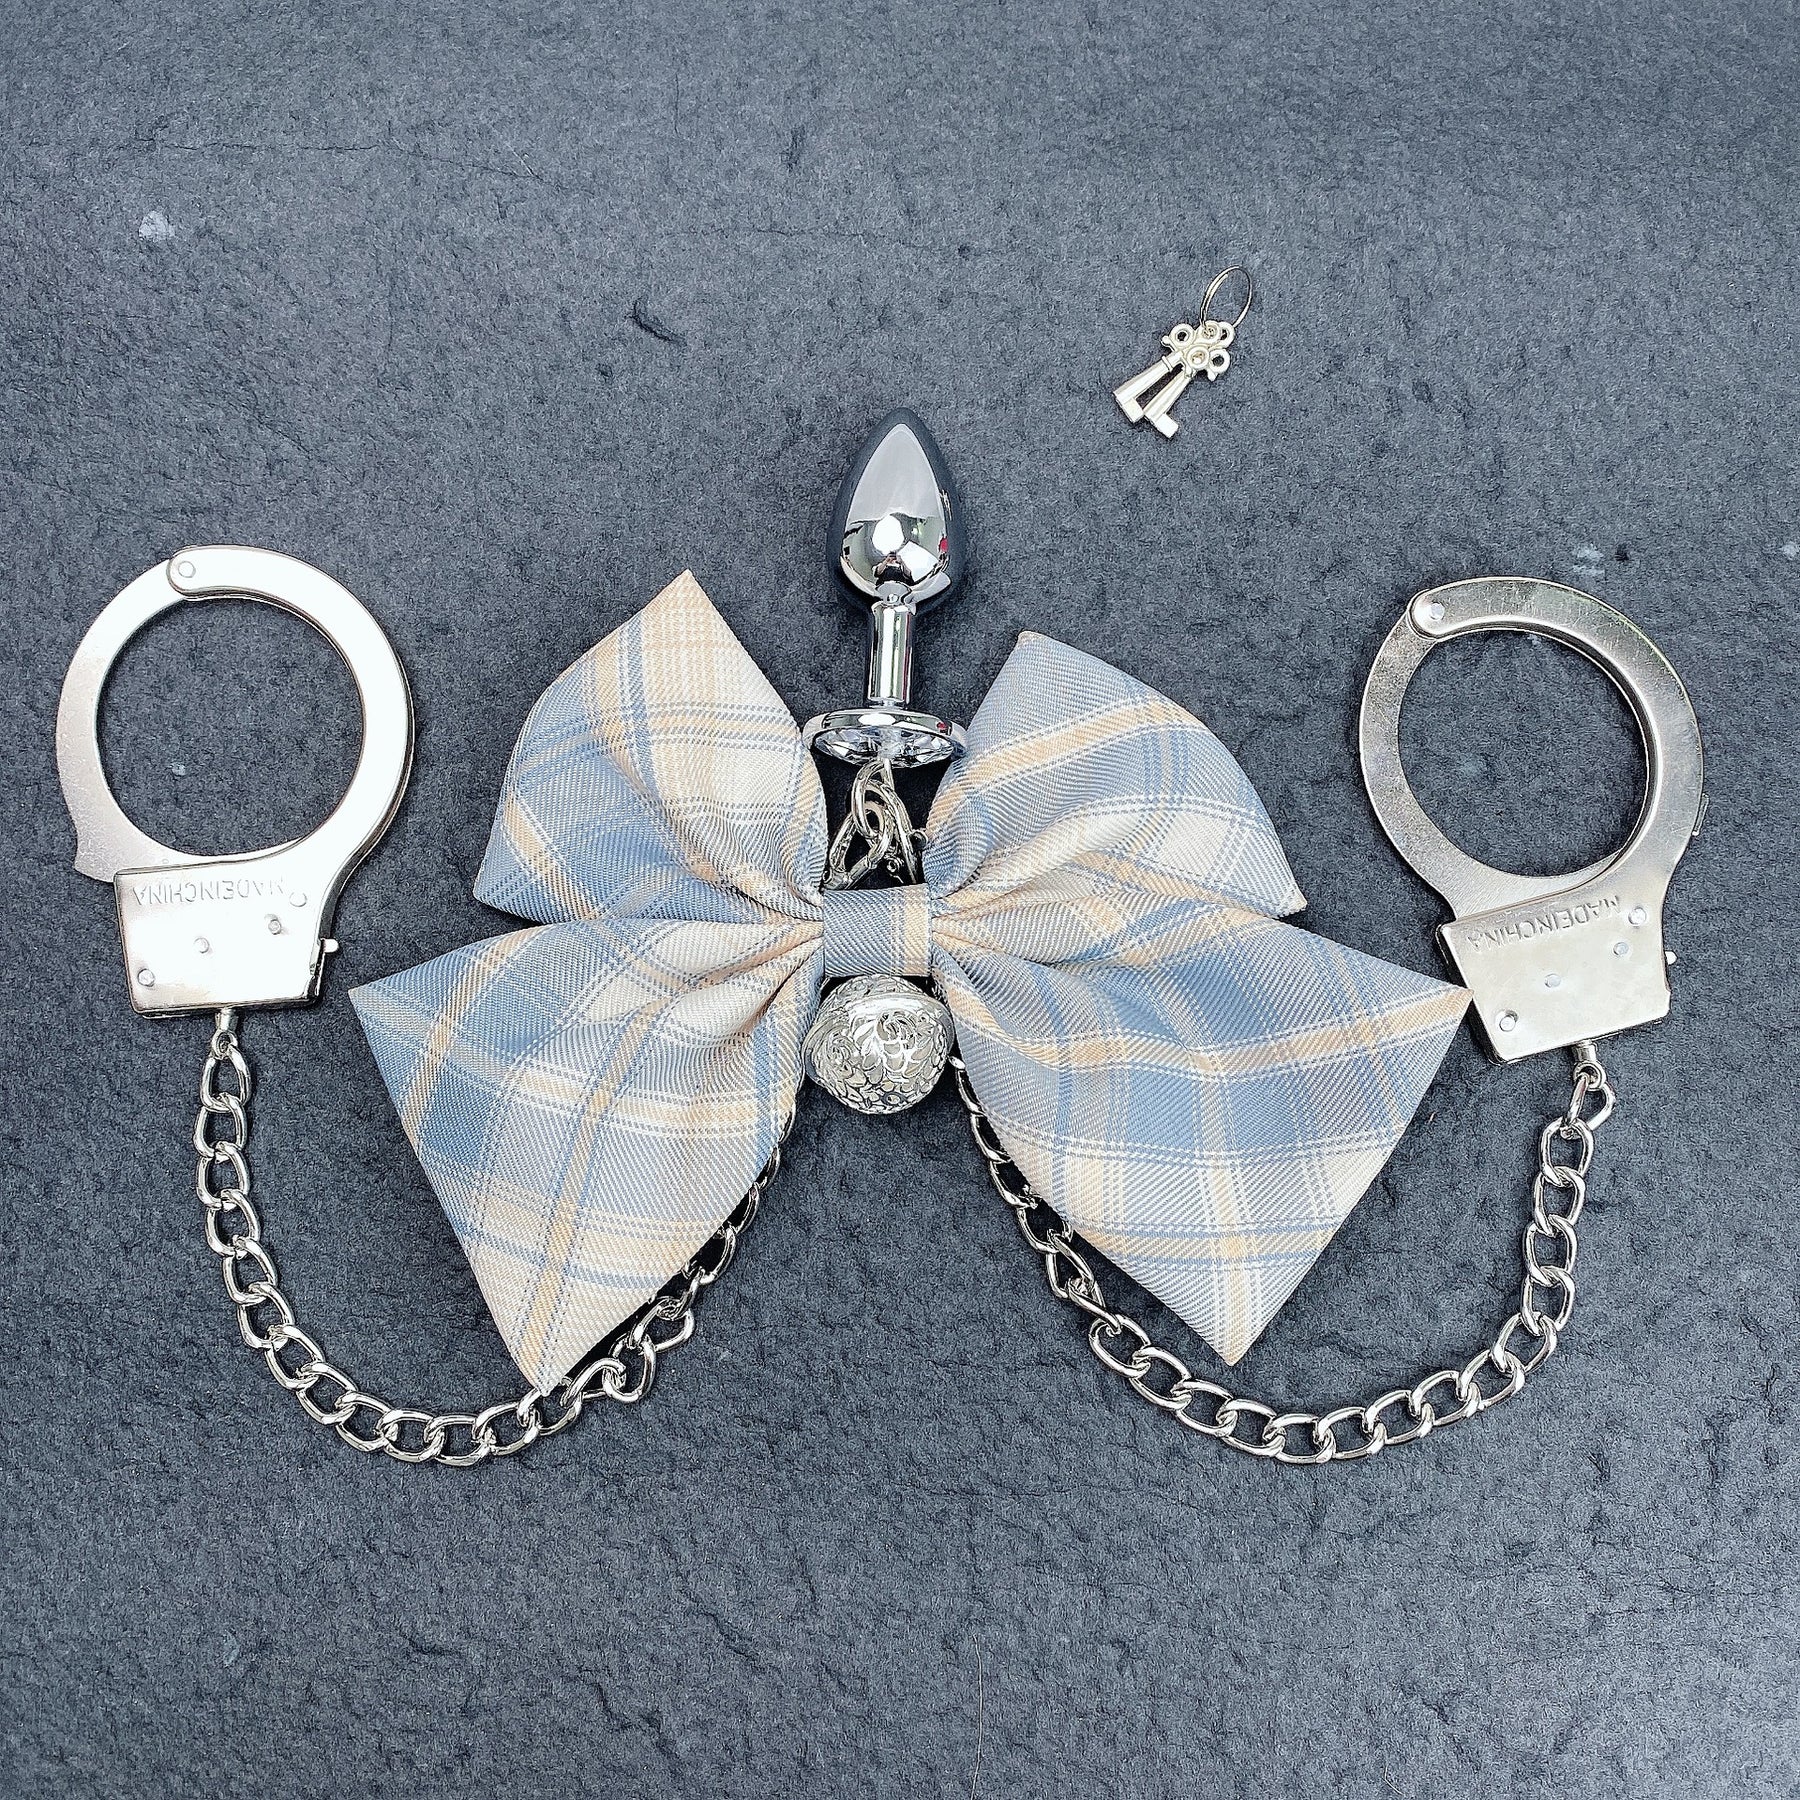 Metal Chains SM Bandage Bow Handcuffs Bandage Set